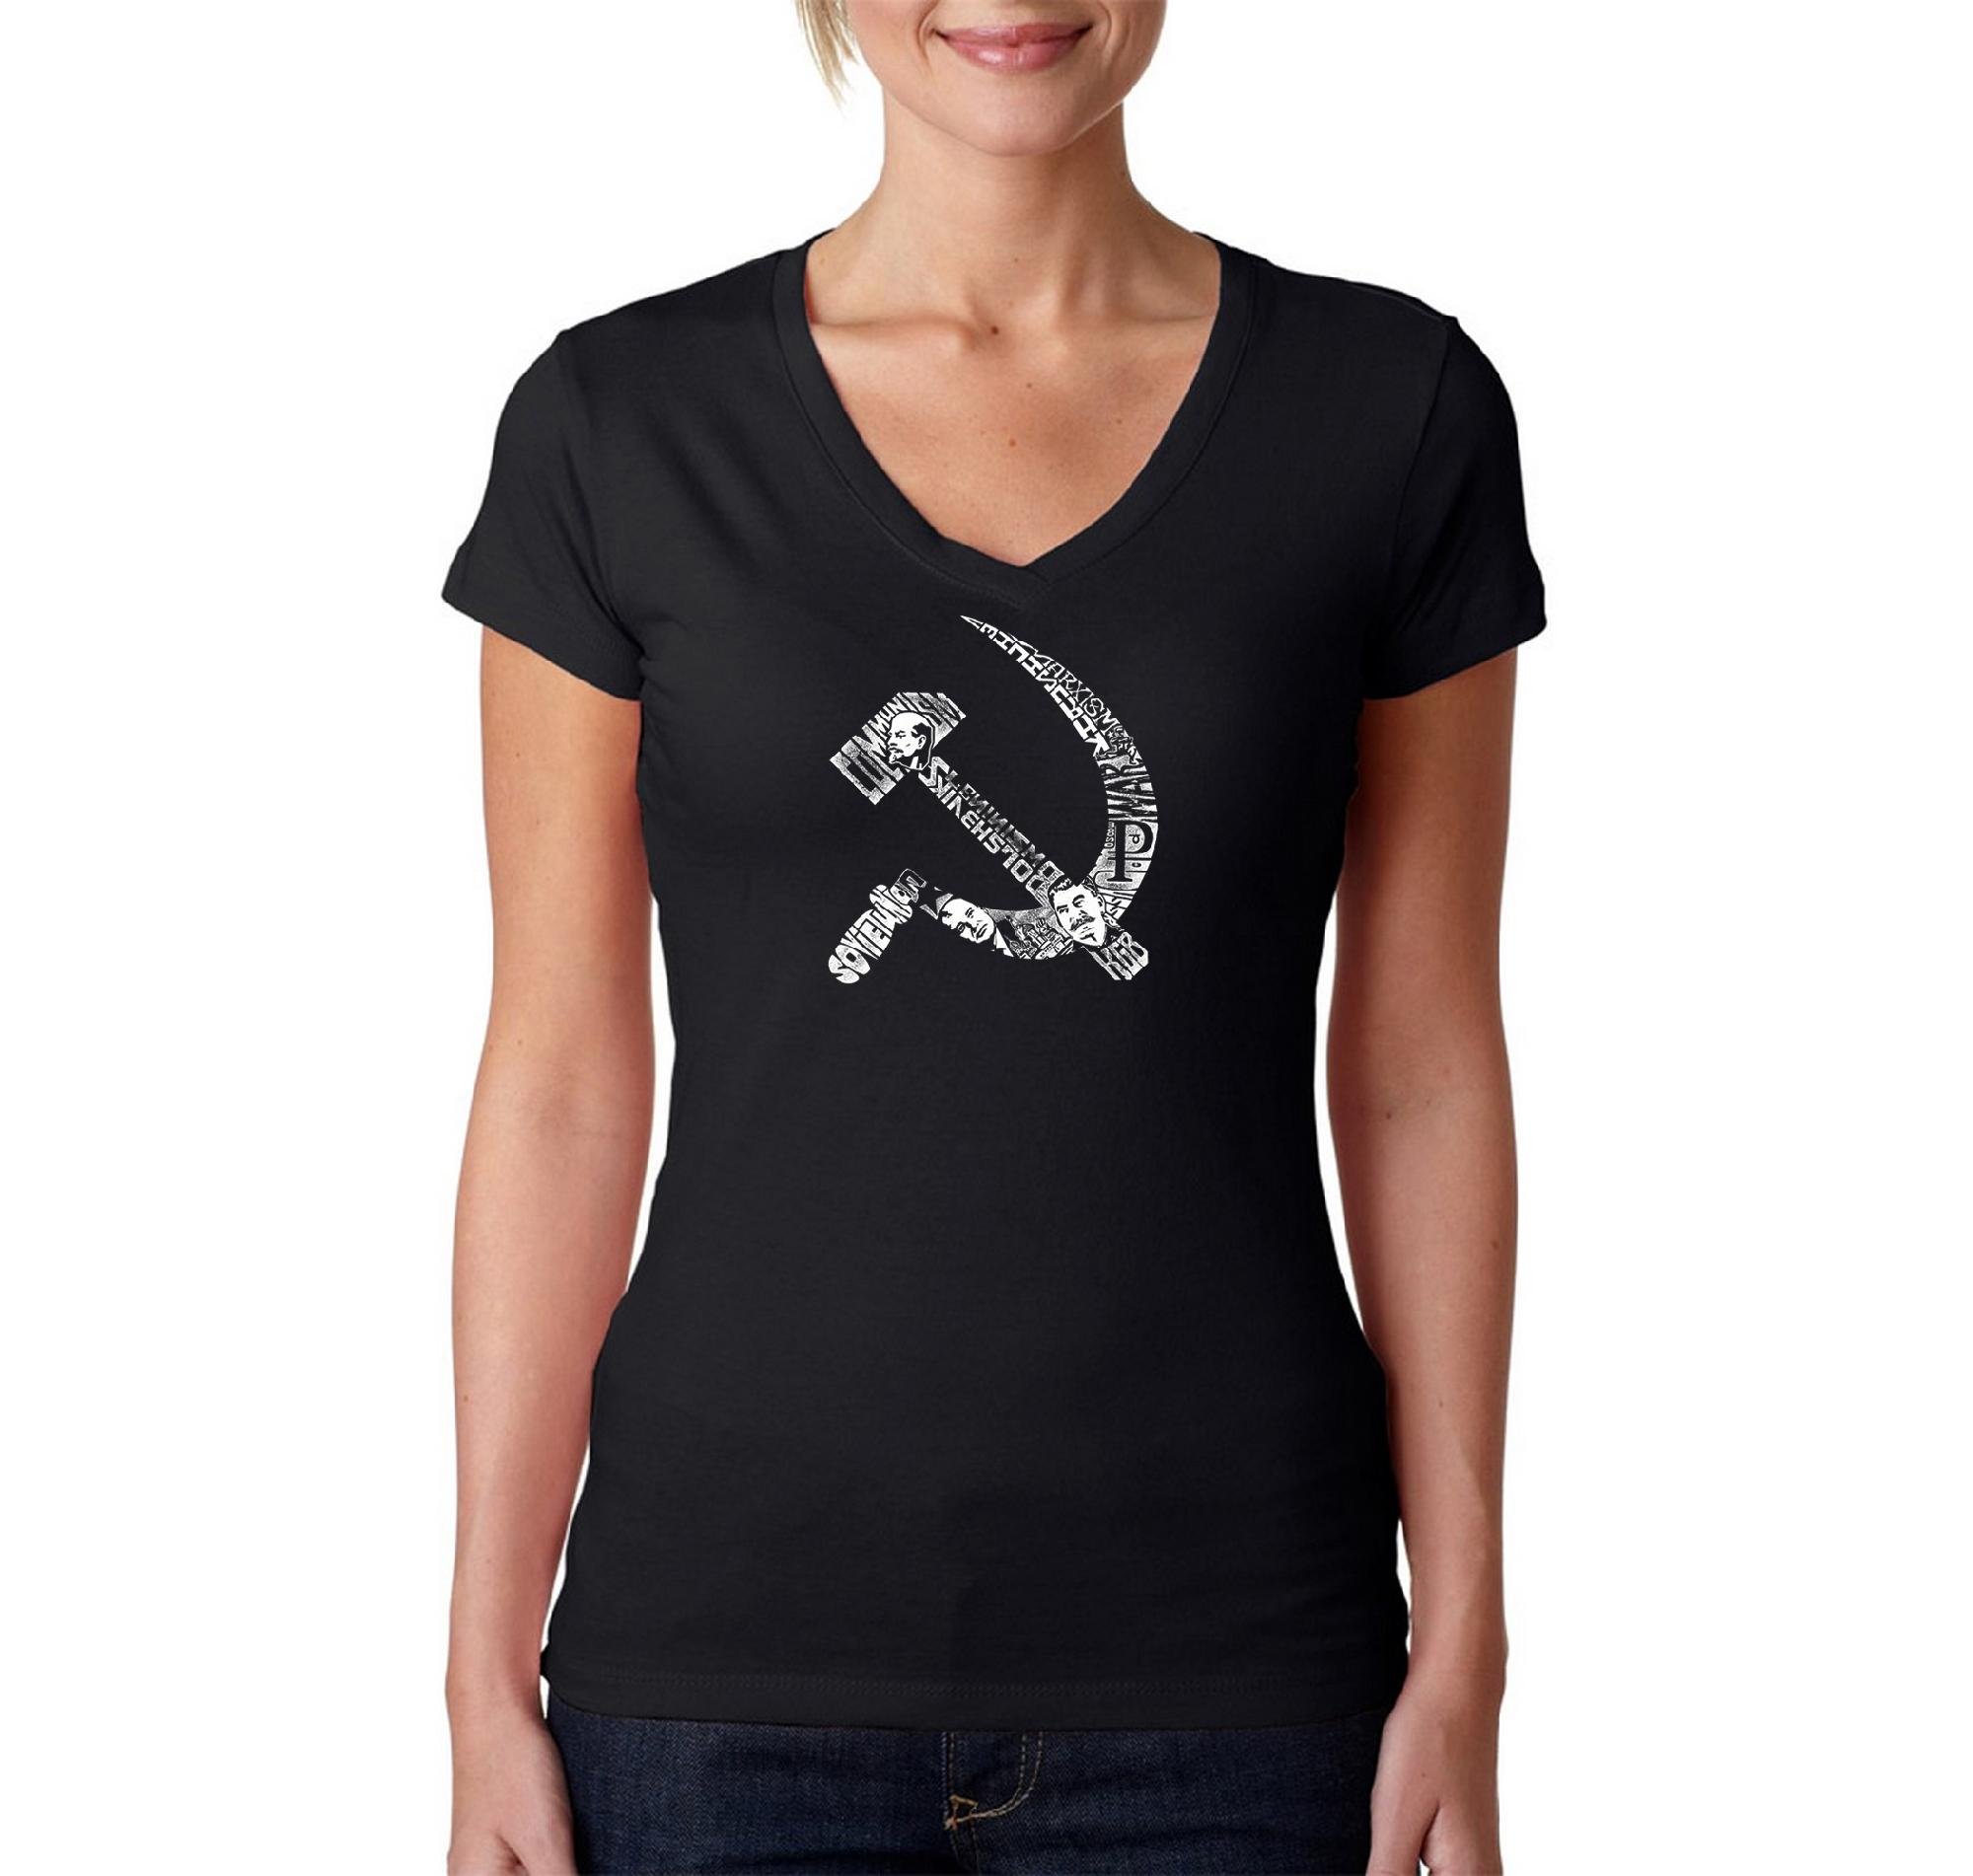 Los Angeles Pop Art Women's Word Art V-Neck T-shirt - Soviet Hammer and Sickle - Online Exclusive